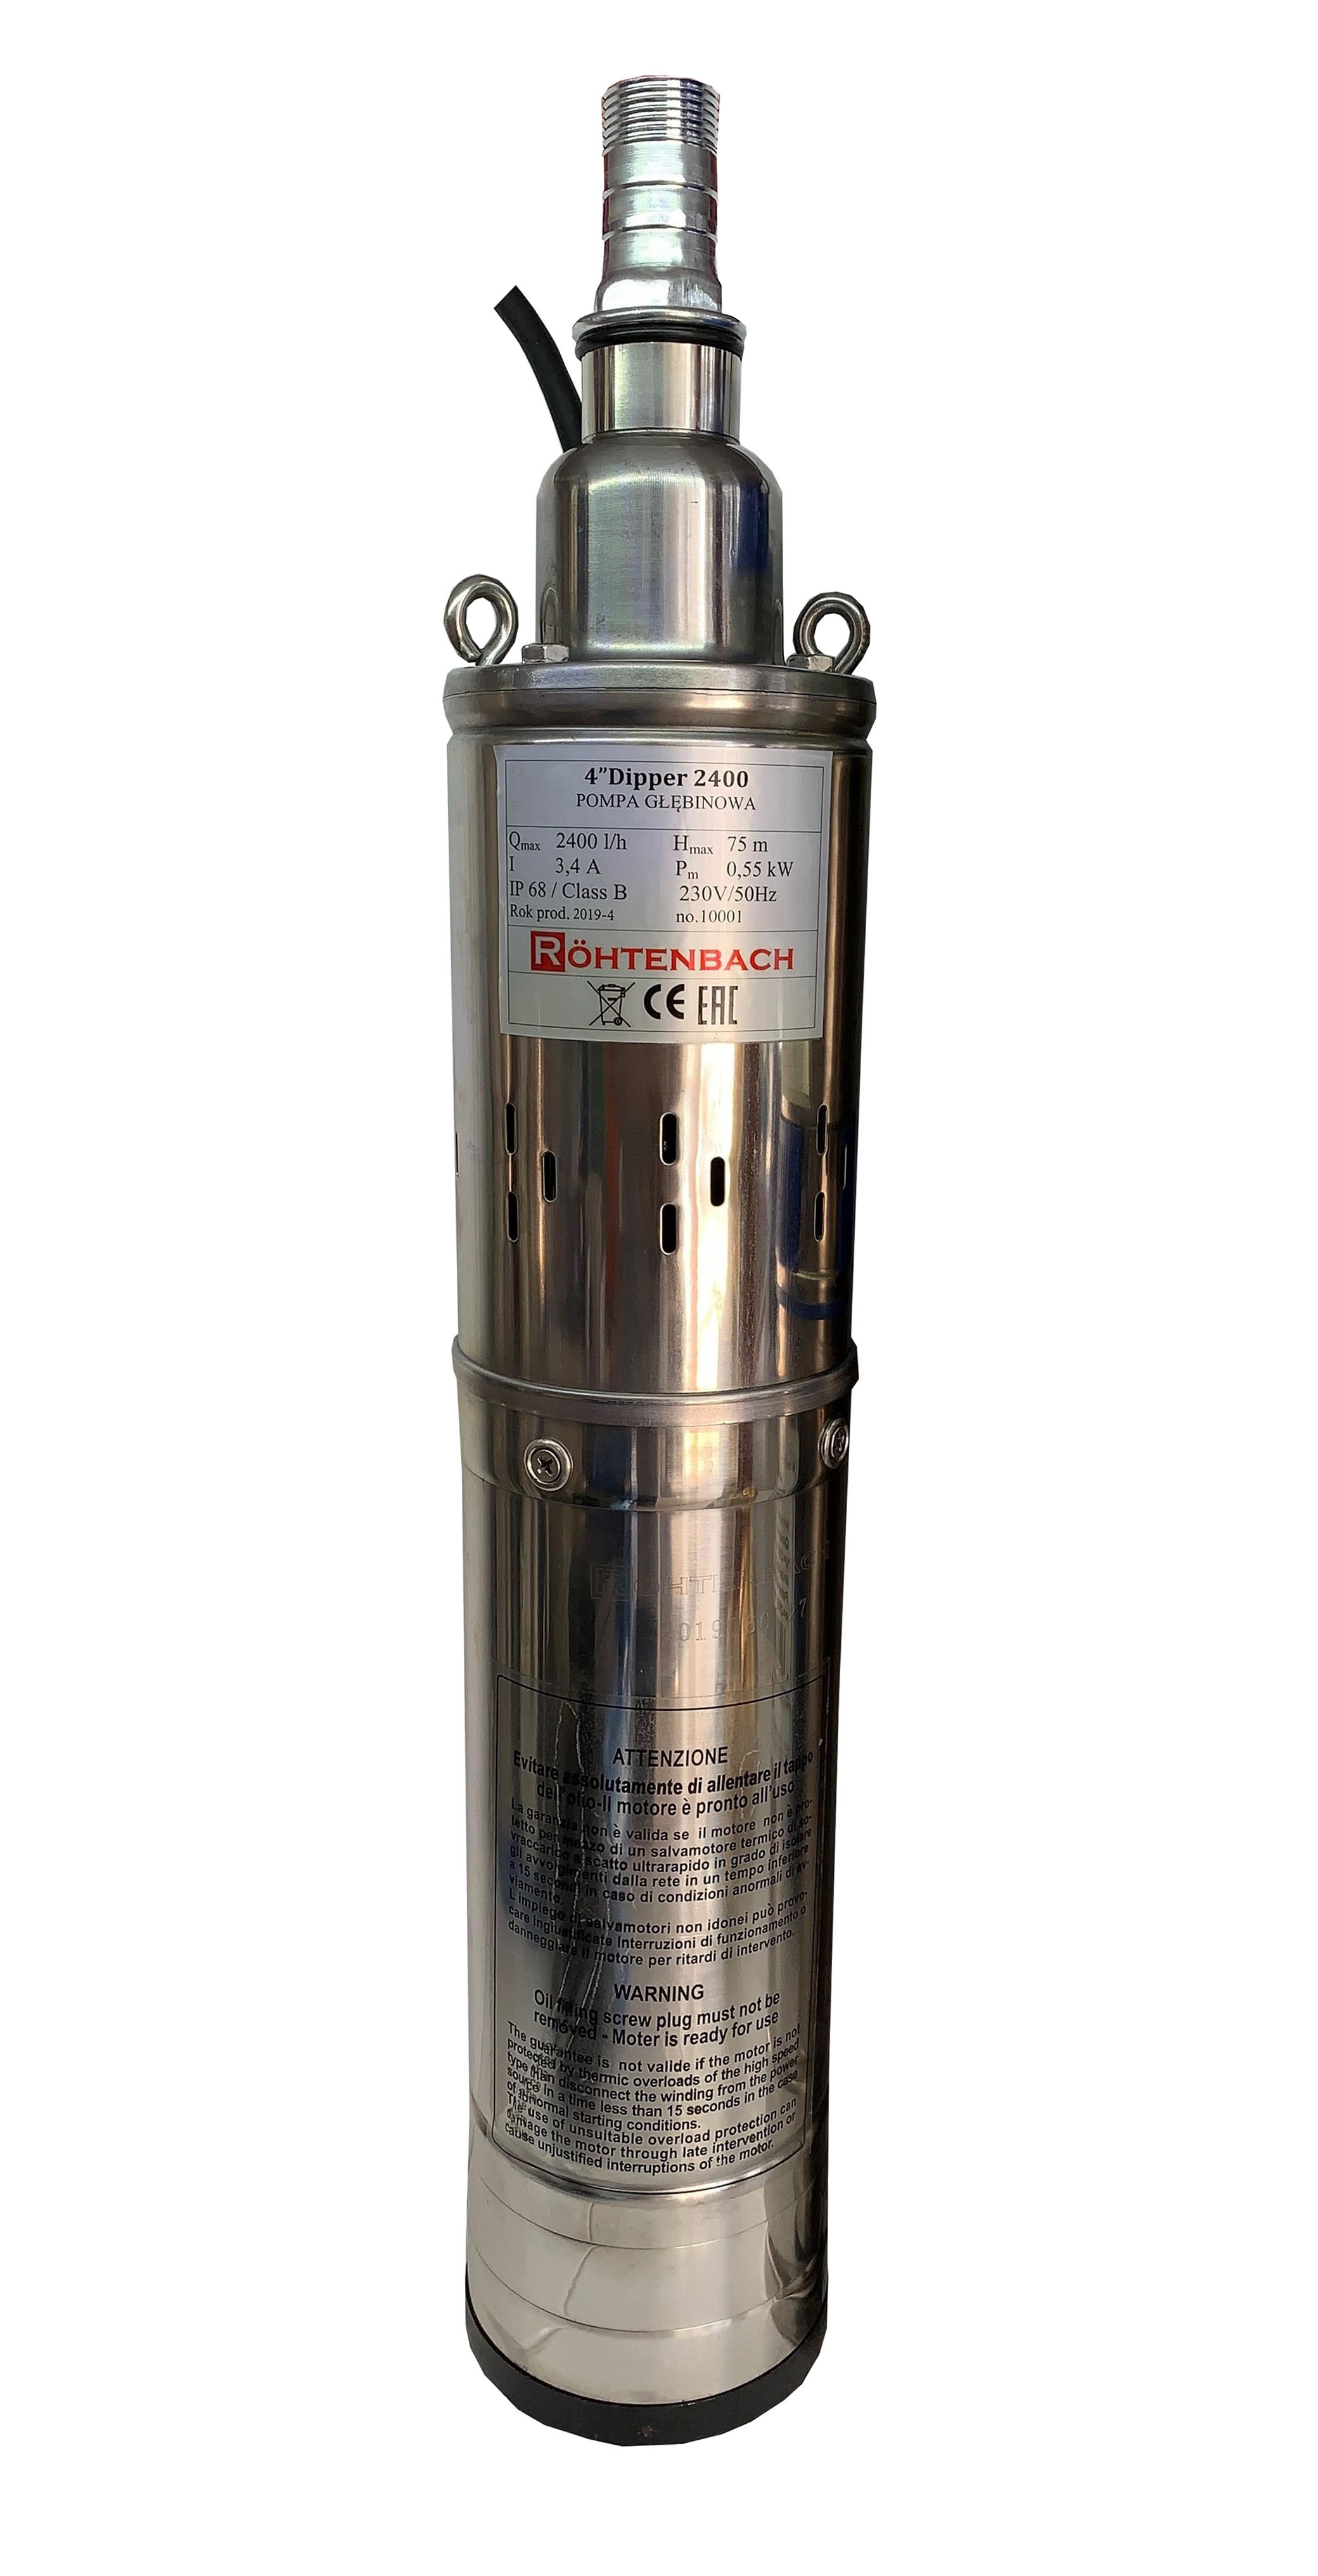 unde se monteaza supapa de sens la pompa submersibila Rohtenbach Pompa submersibila qgd rohtenbach dipper 2400